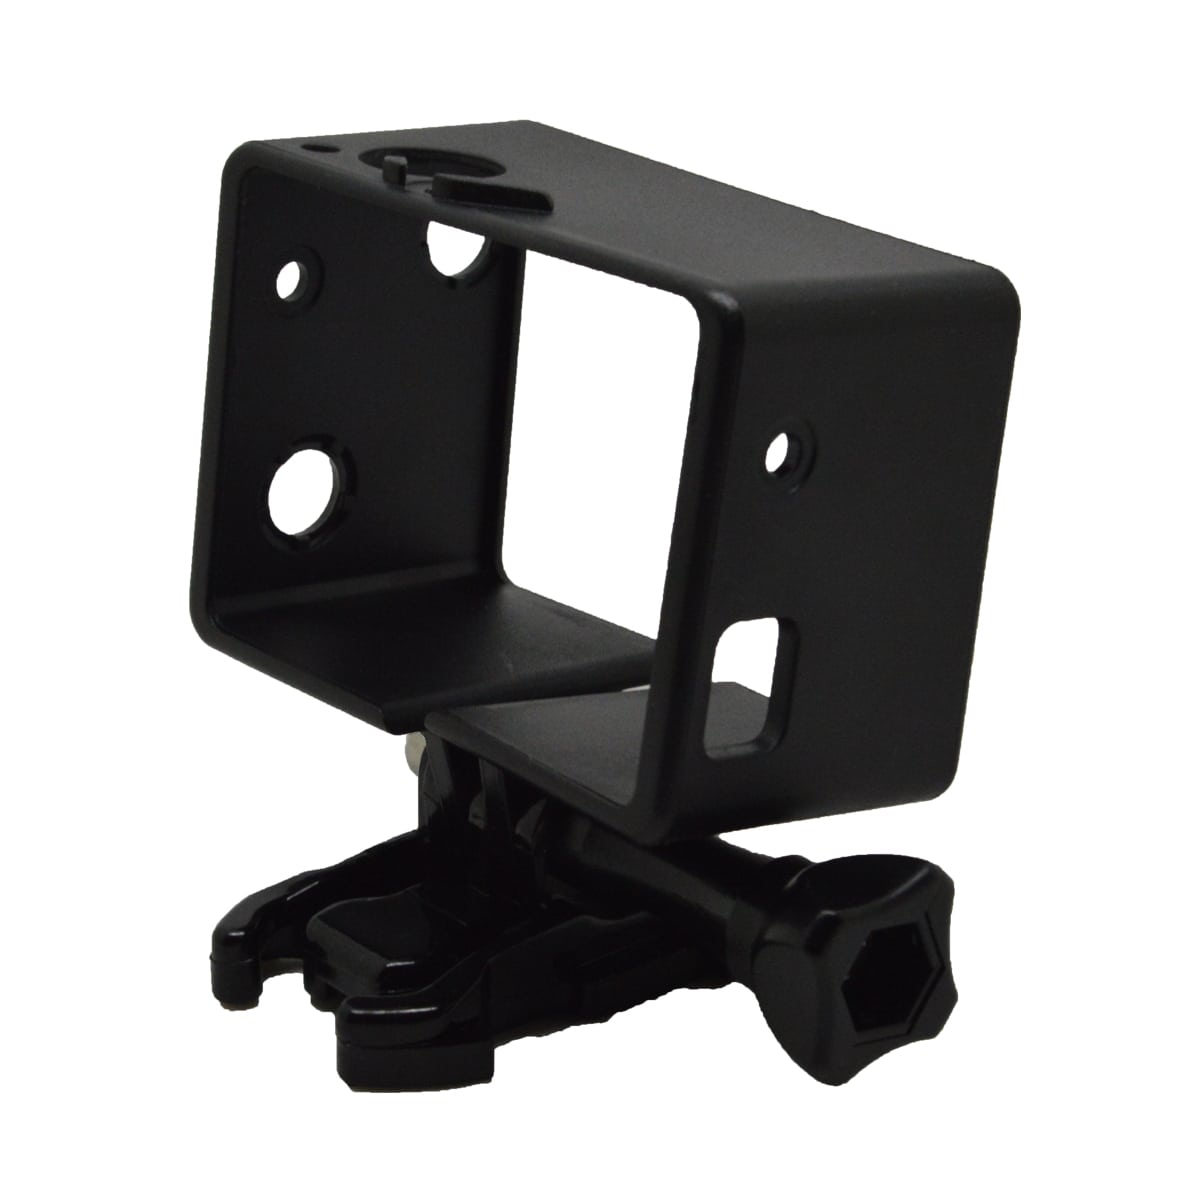 Frame Mount suitable for GoPro HD Hero 3 Black Edition Action-Cam - Plastic Black